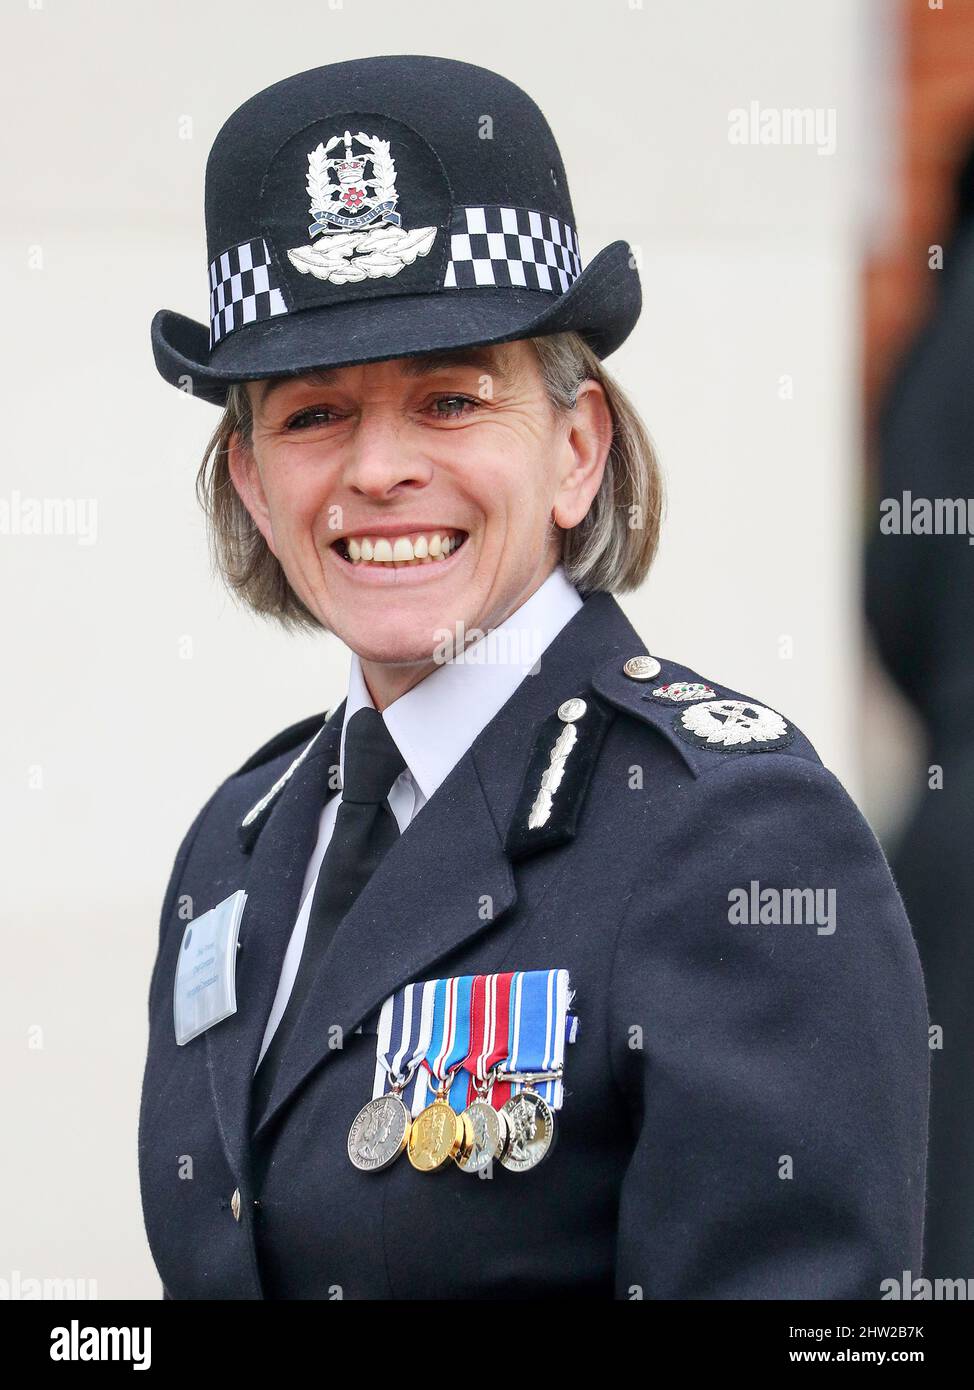 Olivia Pinkney Chief Constable of Hampshire Constabulary. Stock Photo